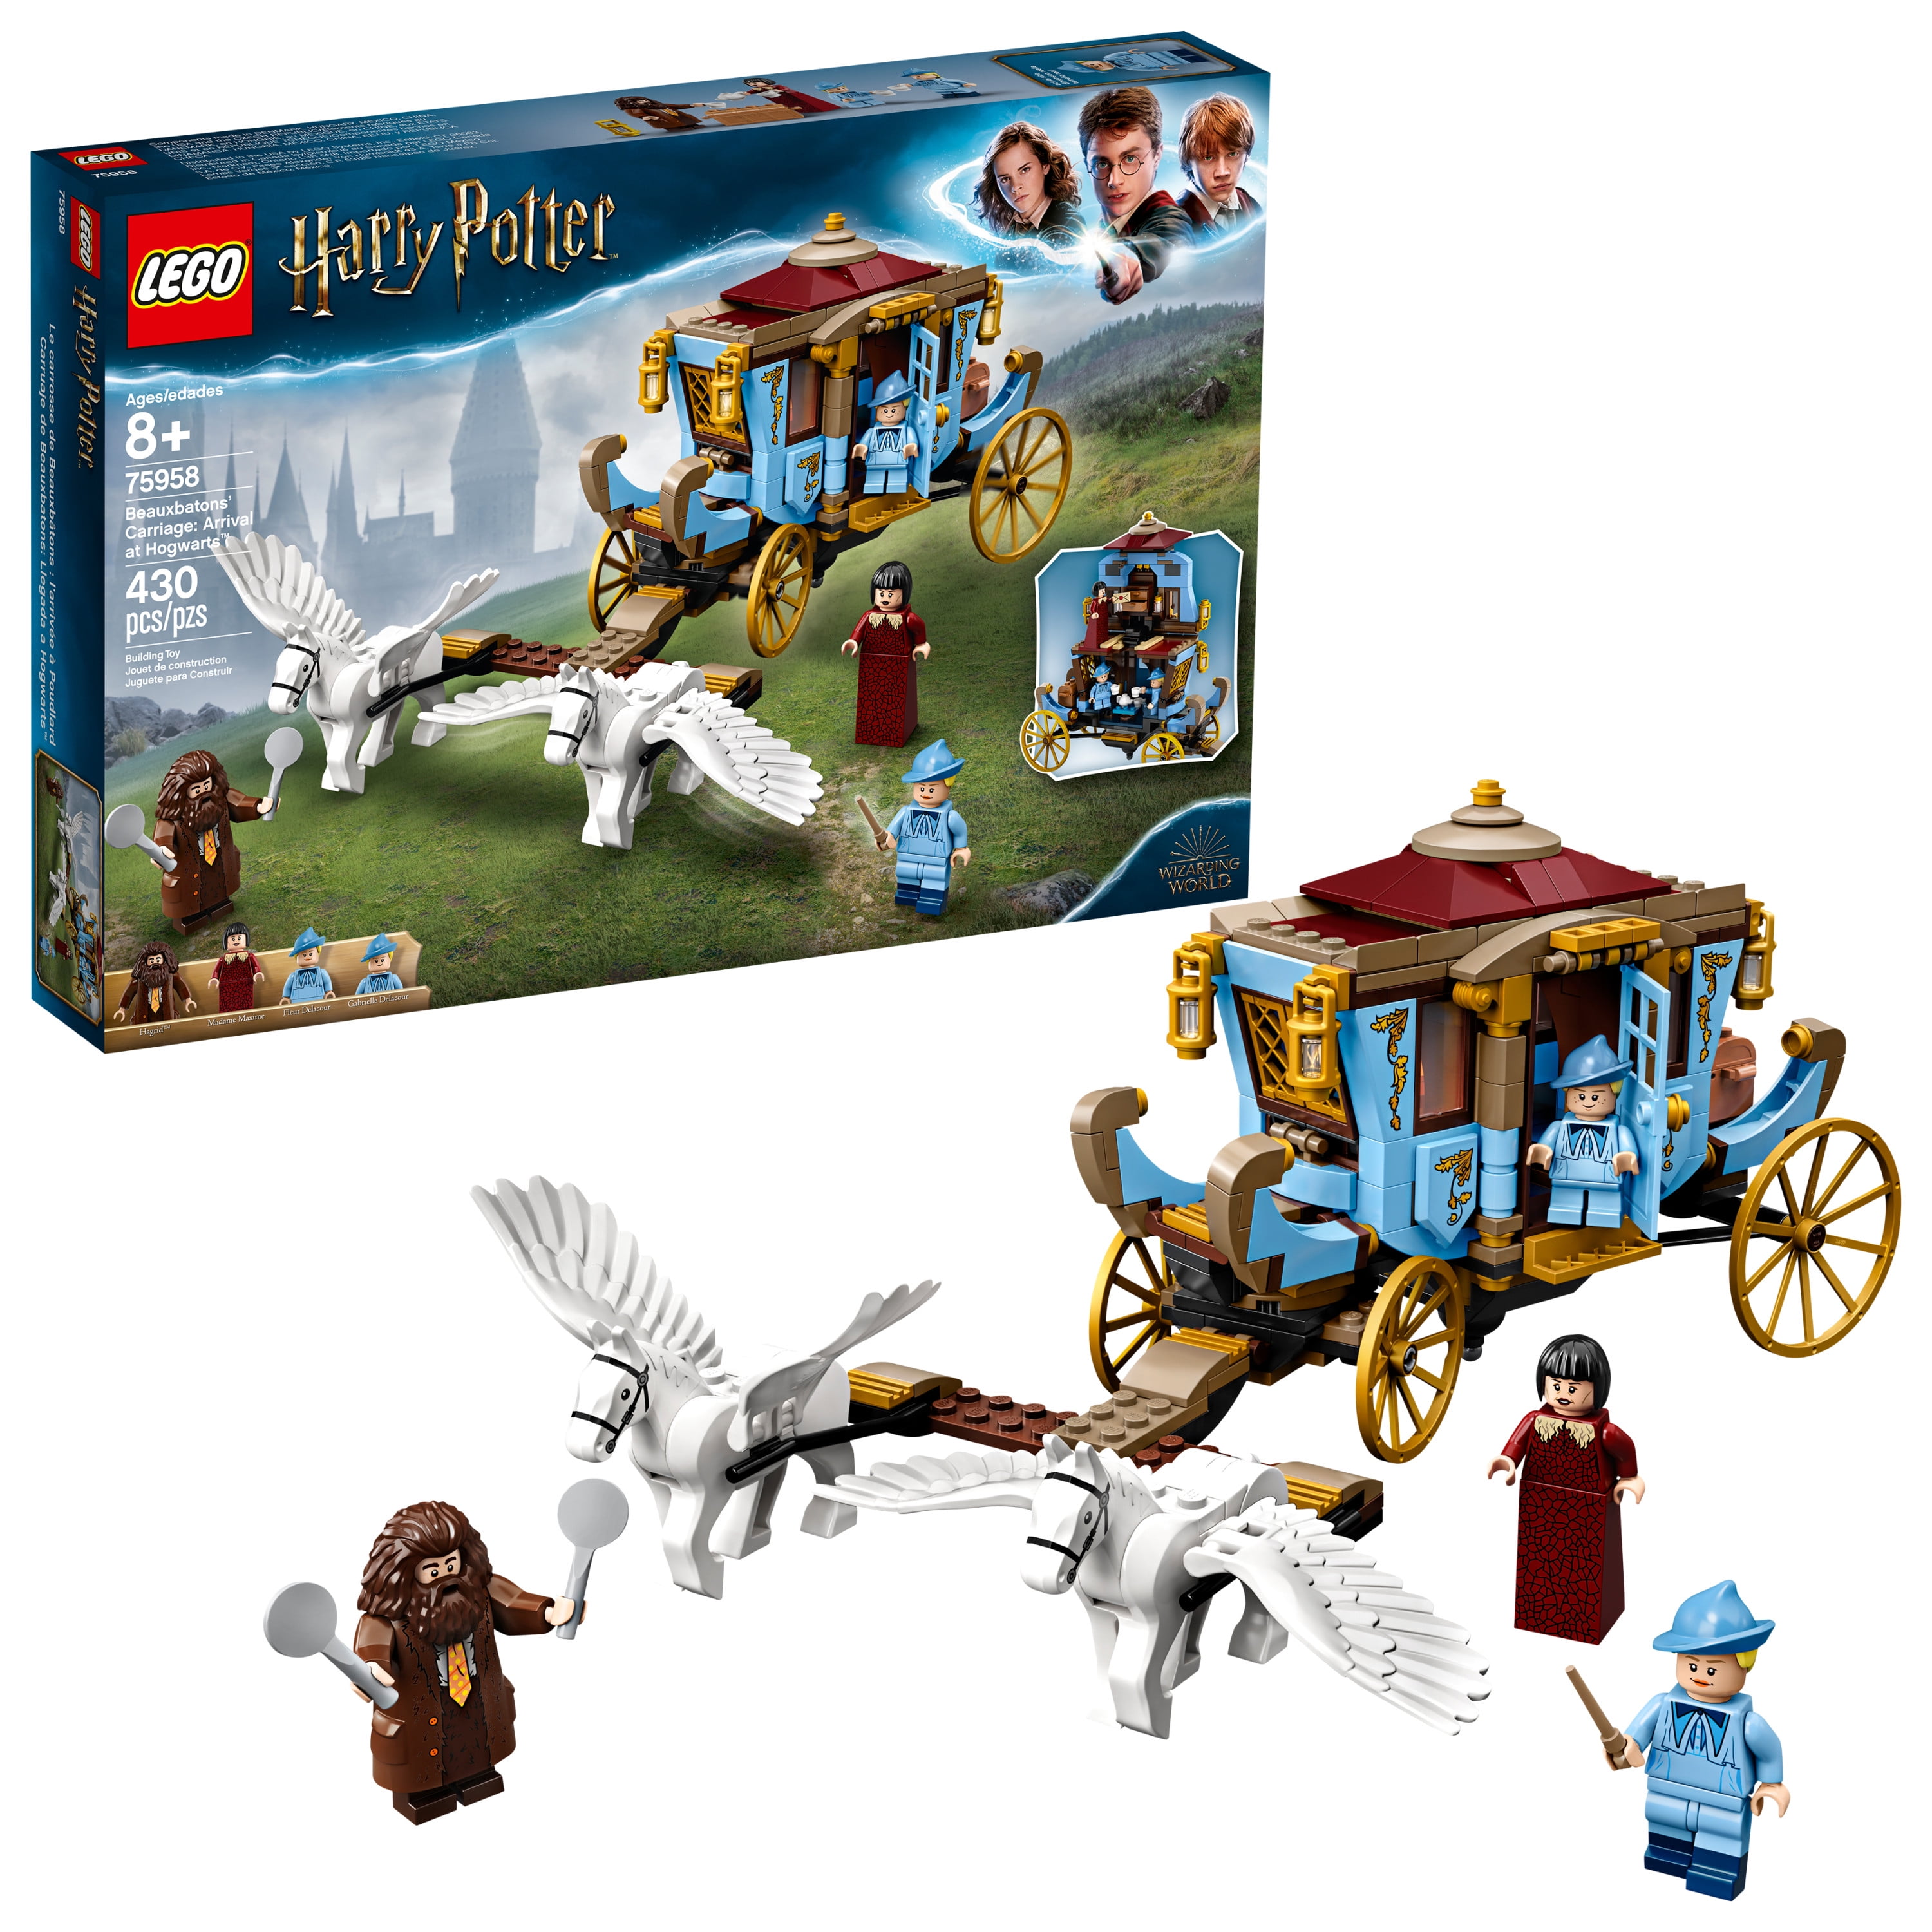 LEGO Harry Potter Hagrids Hut 496 Pieces Buckbeaks Rescue 75947 Toy Hut Building Set from The Prisoner of Azkaban Features Buckbeak The Hippogriff Figure